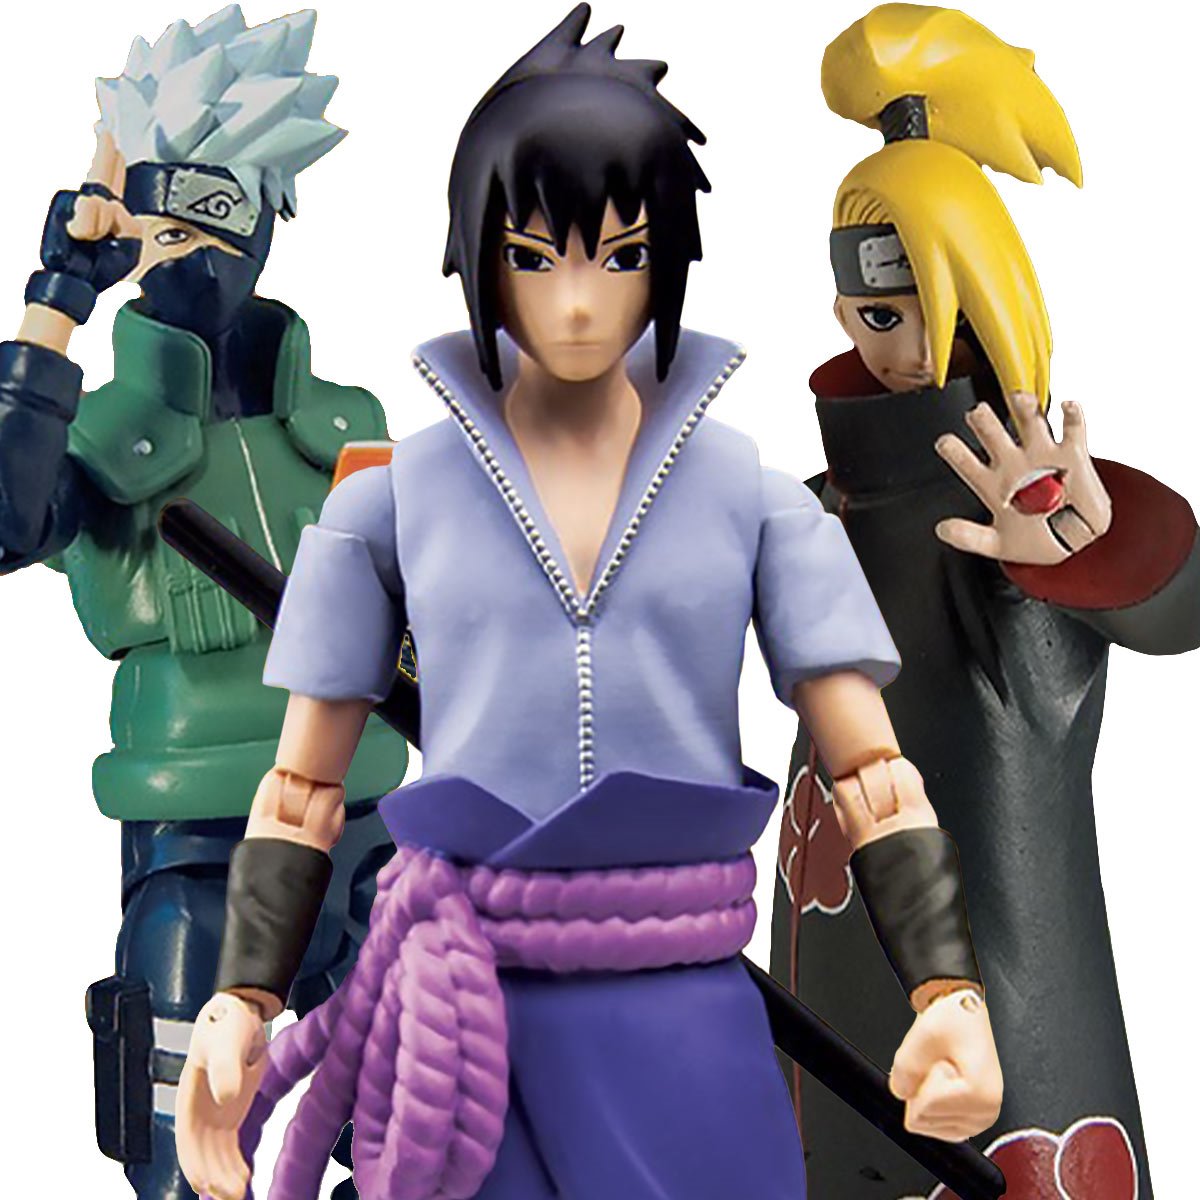  ANIME HEROES - Naruto - Naruto Uzumaki Sage of Six Paths Mode  Action Figure : Everything Else